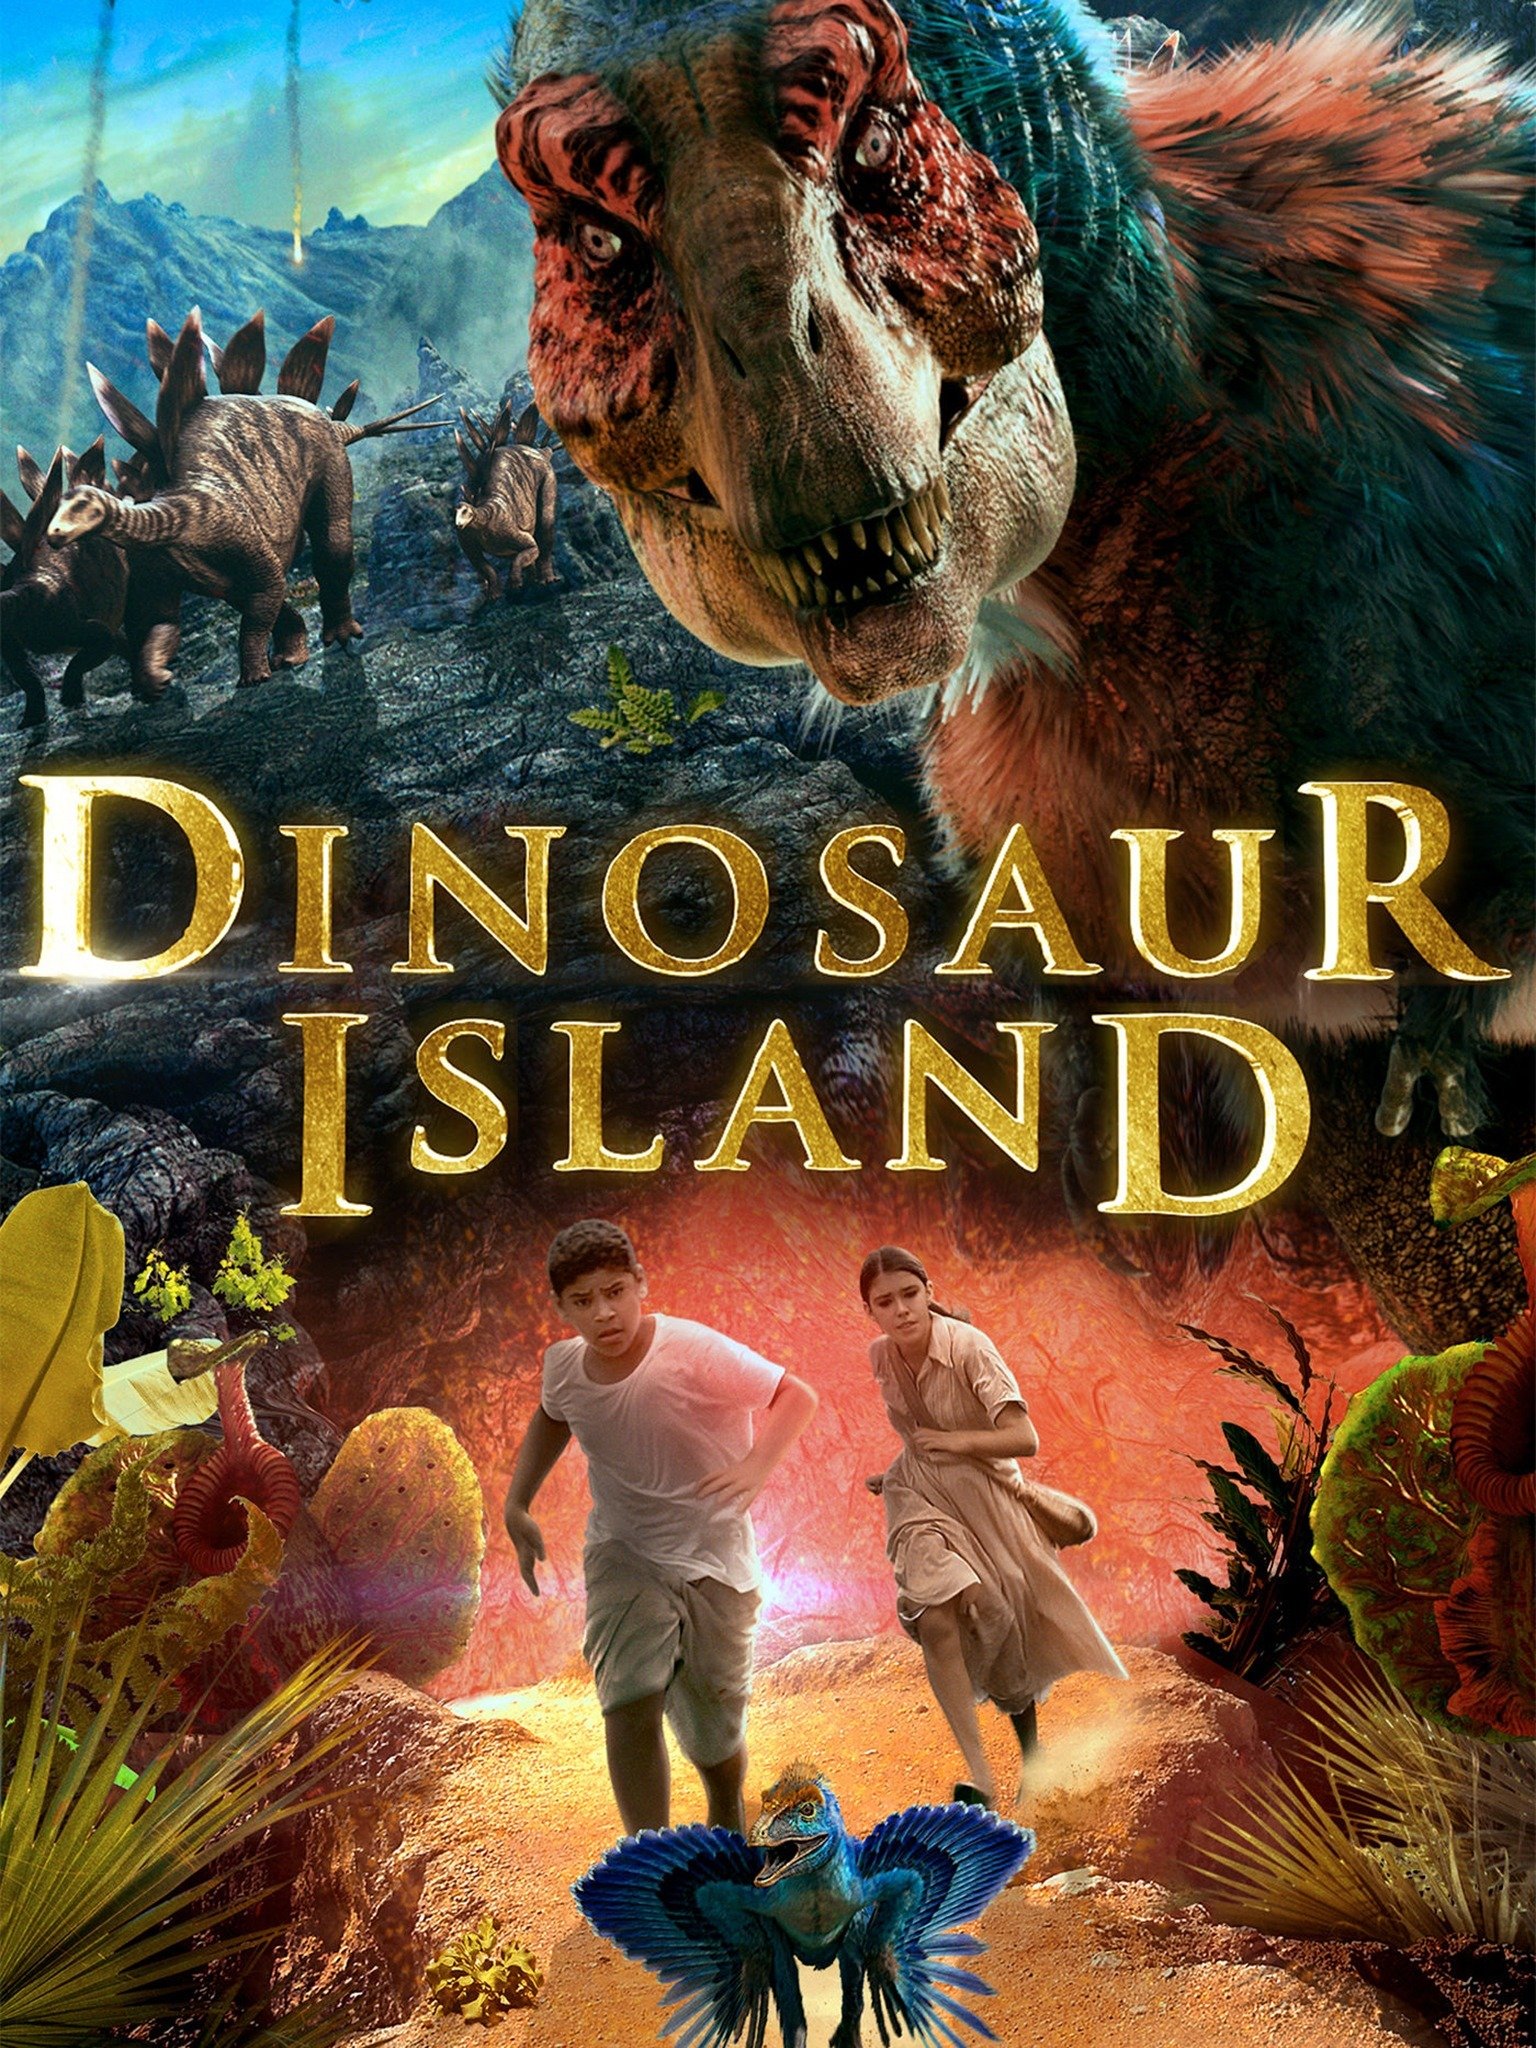 Dinosaur island trailer